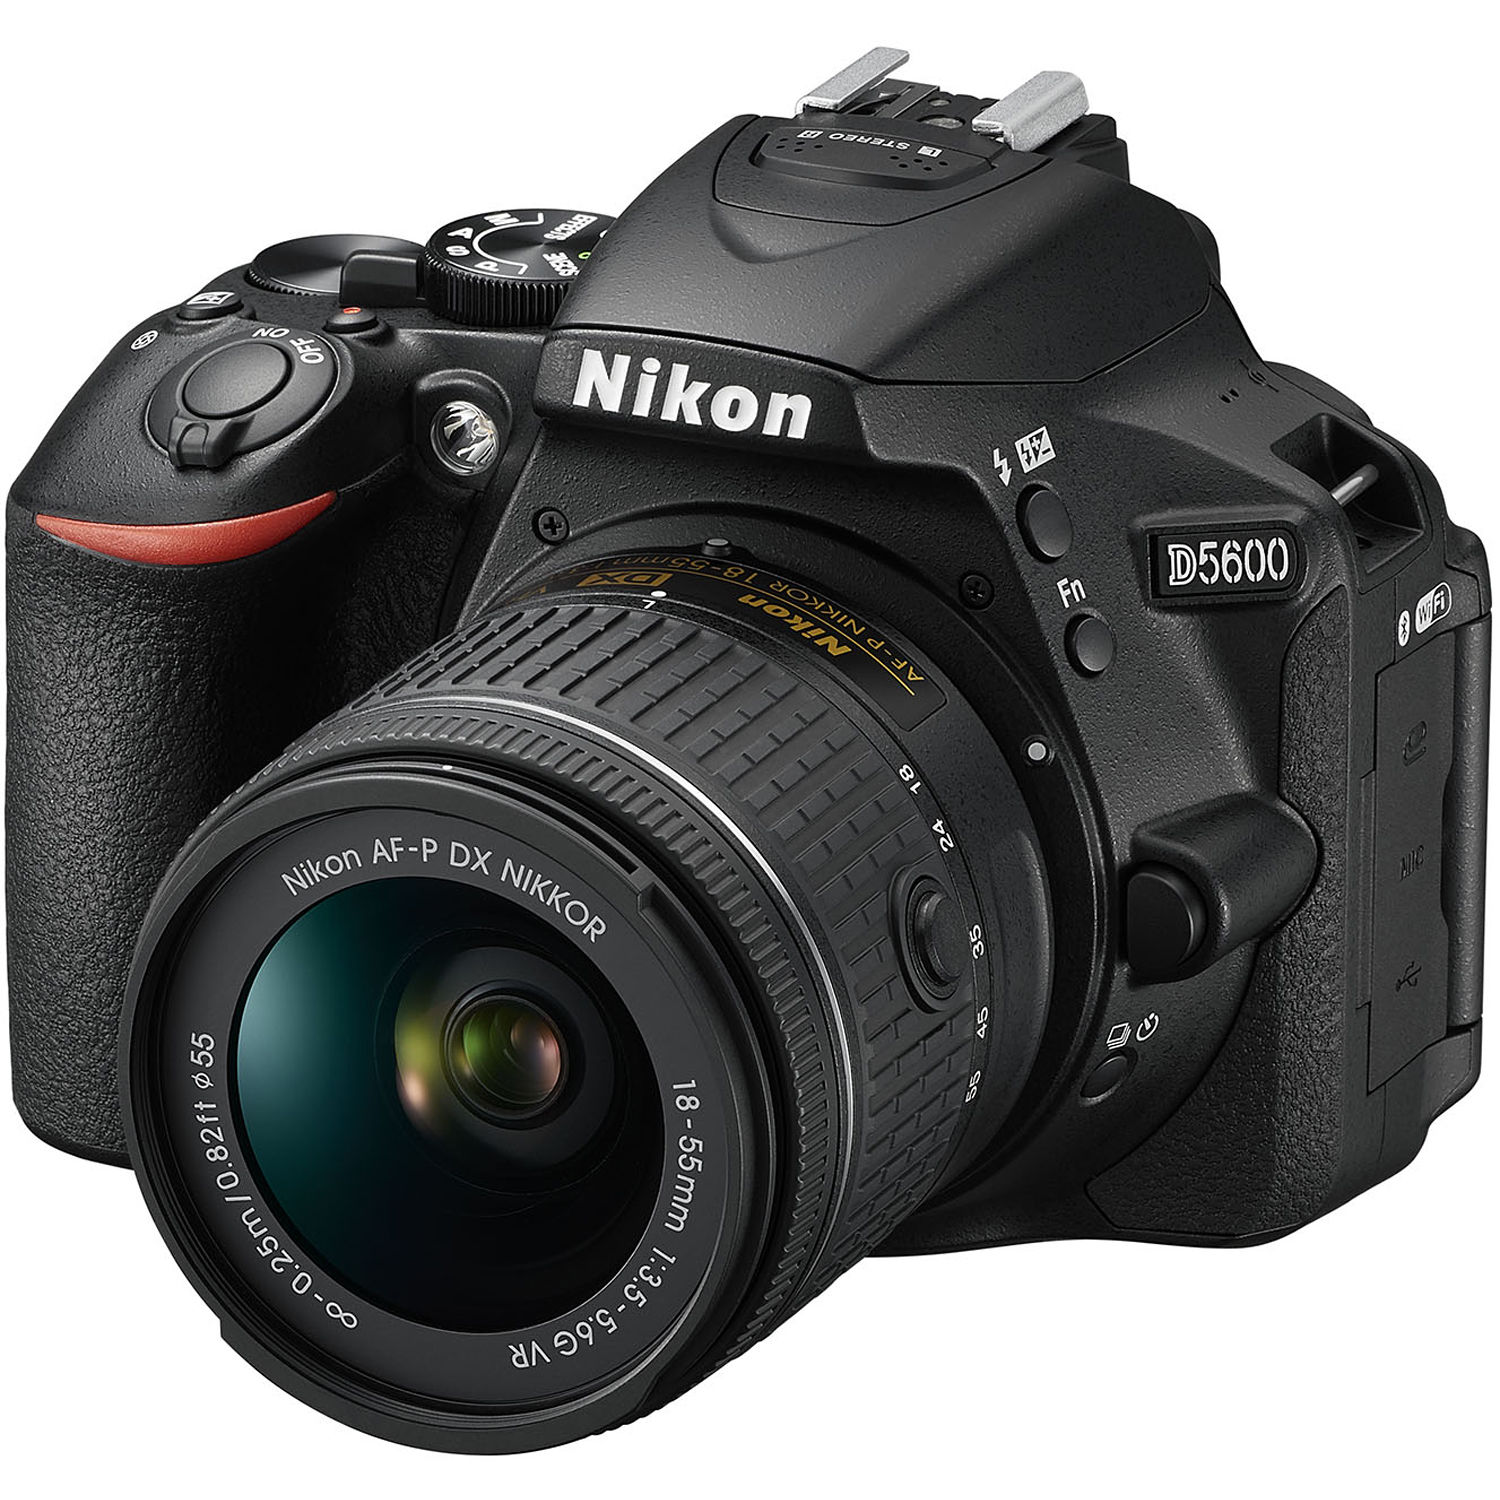 Nikon D5600 Specs, Price, Battery & Lens - Rusty Guide